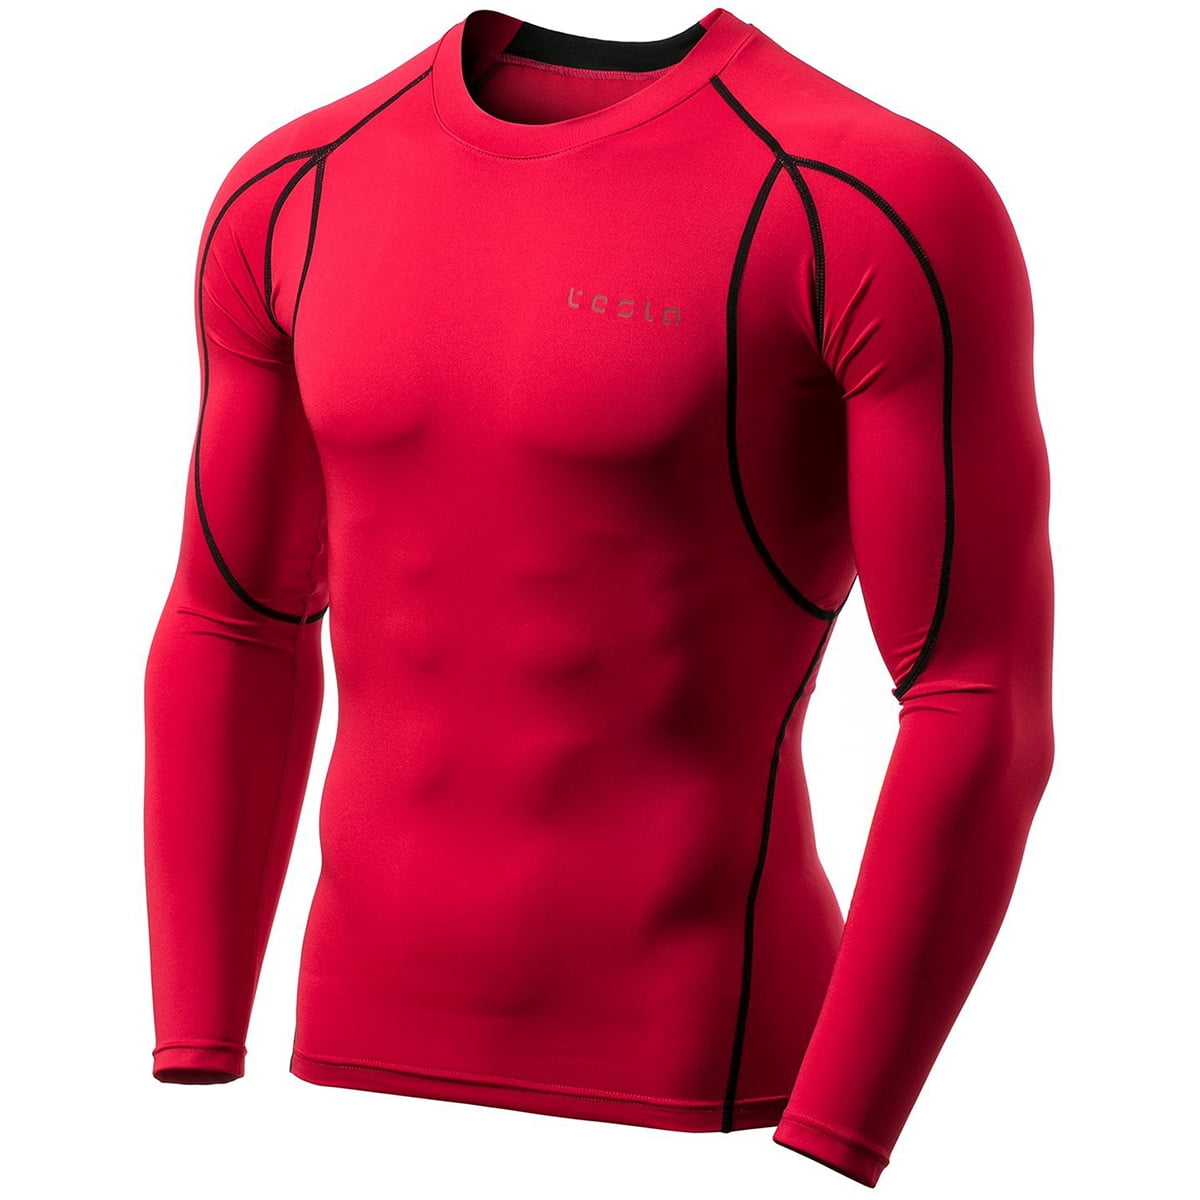 TSLA Compression Shirt Men Base Layer Long Sleeve Workout T-Shirt Clothes Men